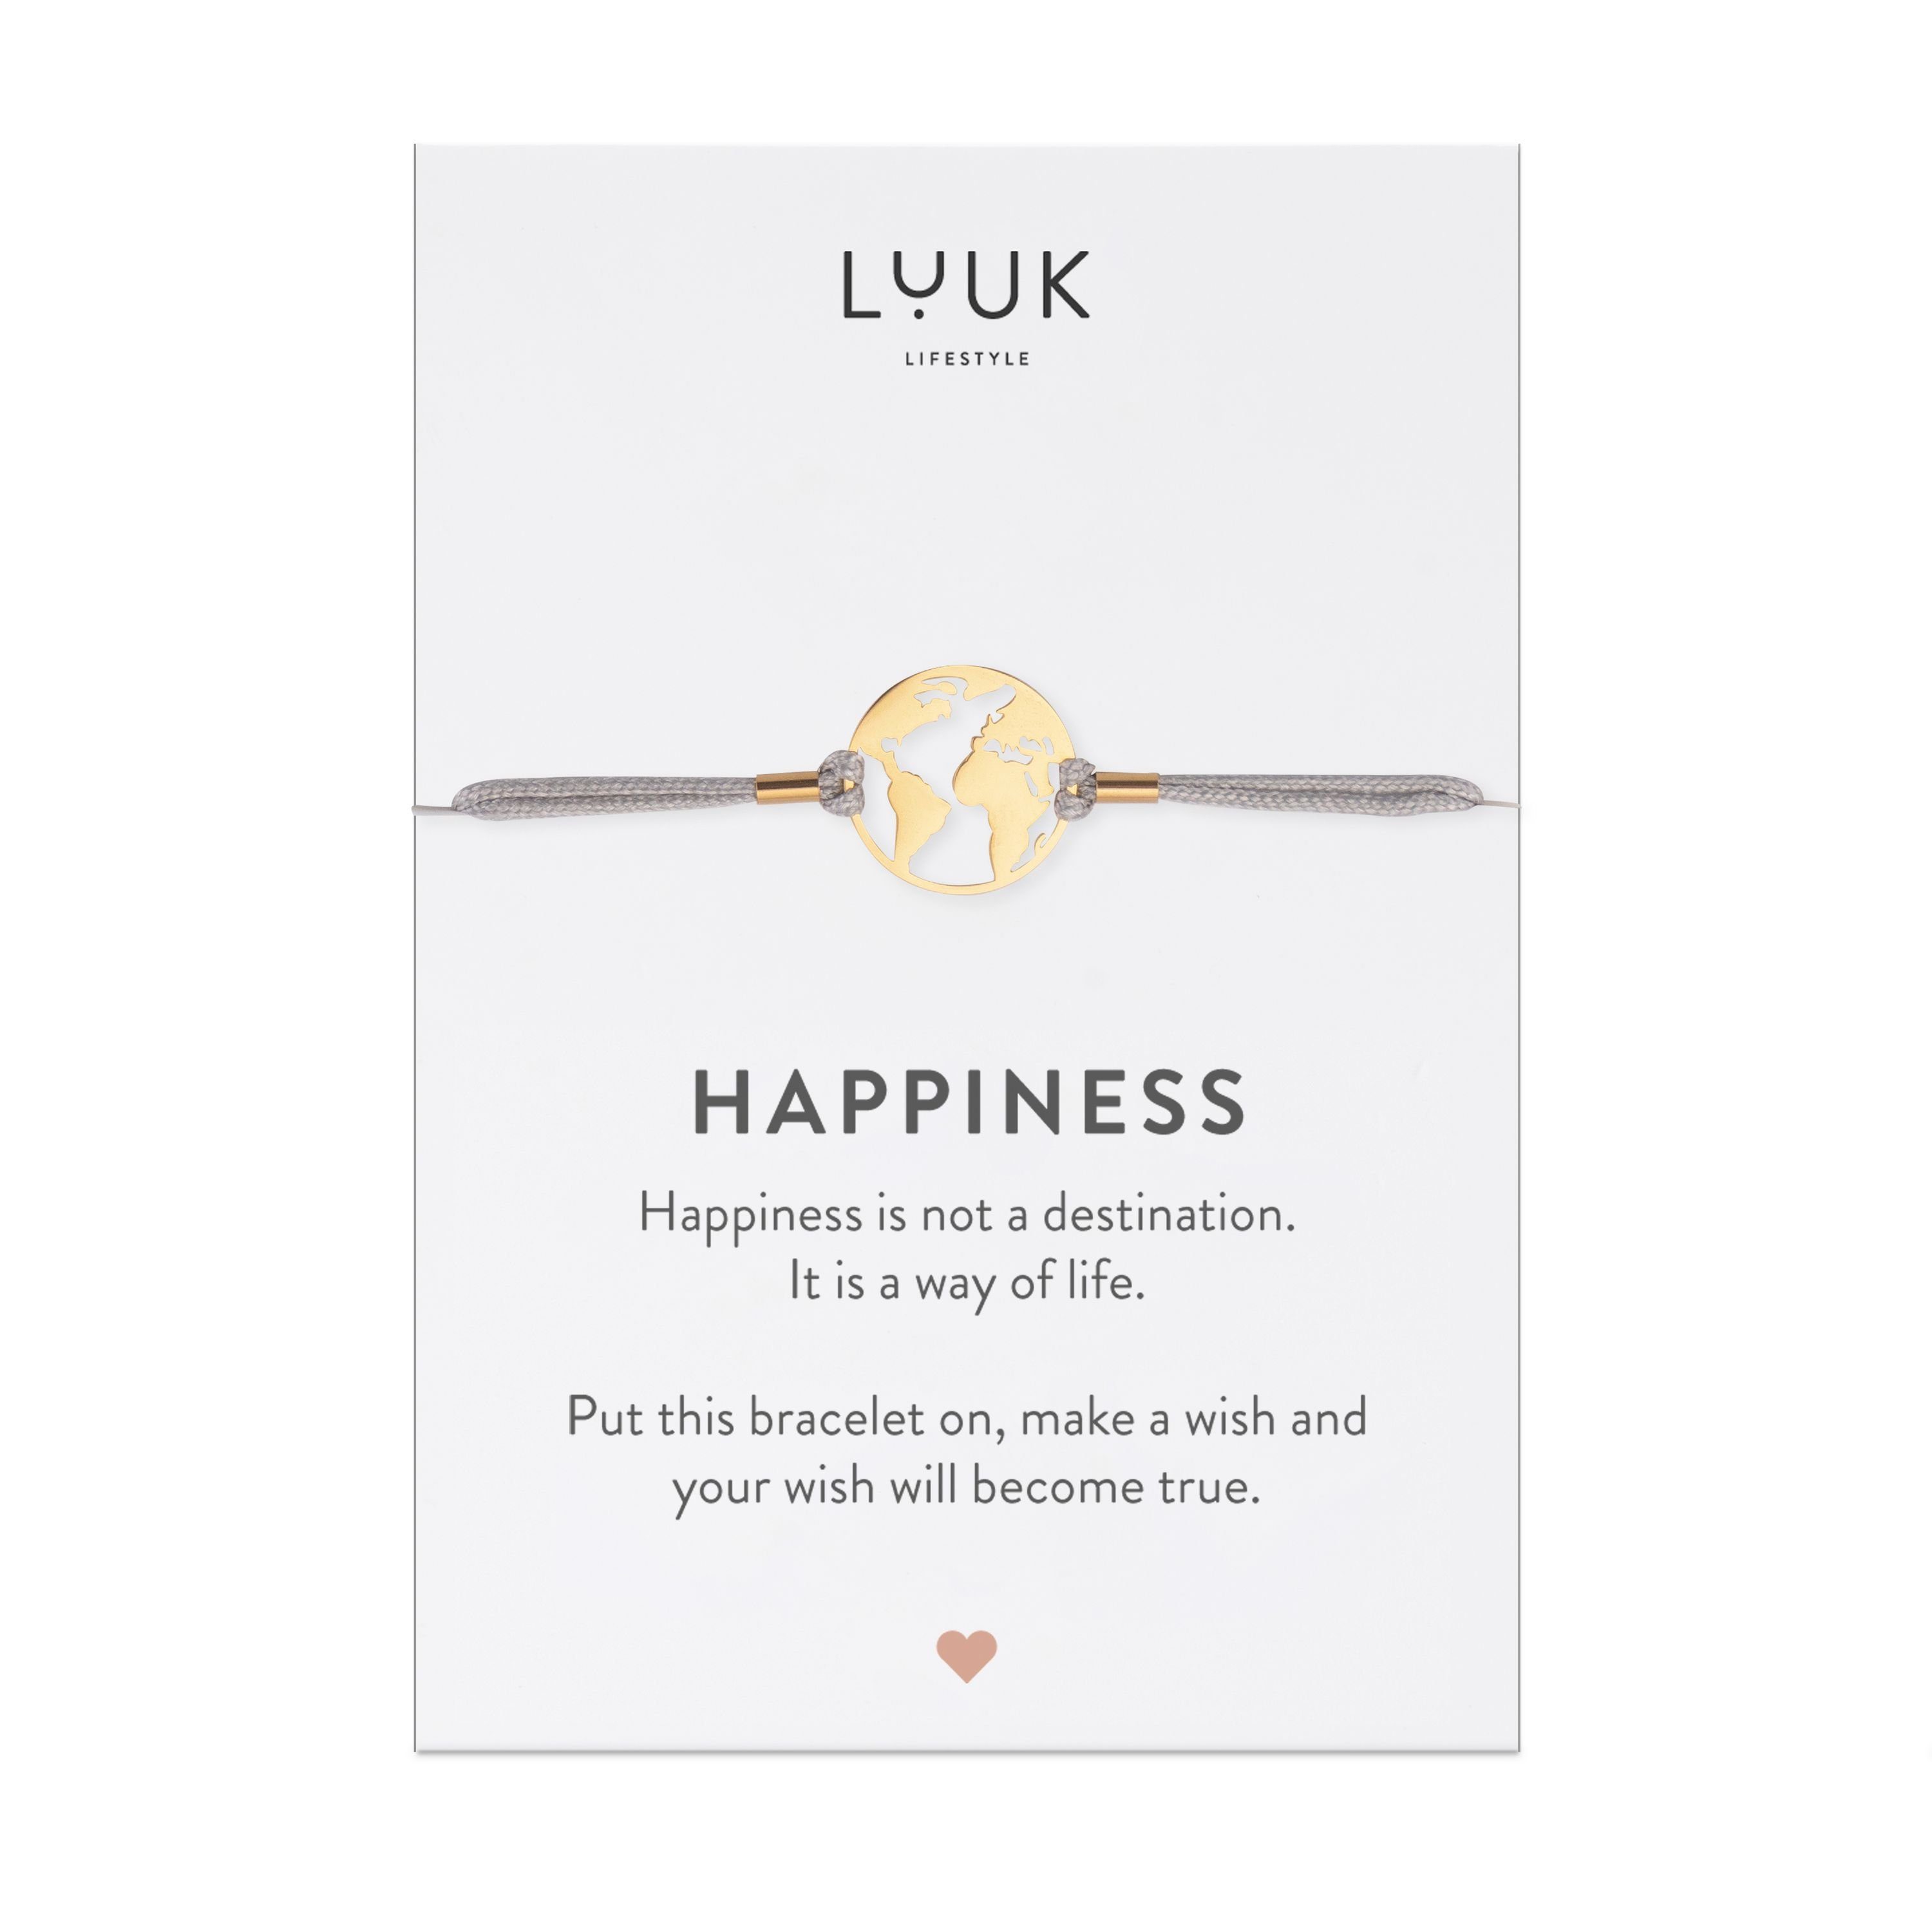 LUUK LIFESTYLE Freundschaftsarmband Happiness Gold handmade, Weltkugel, Spruchkarte mit